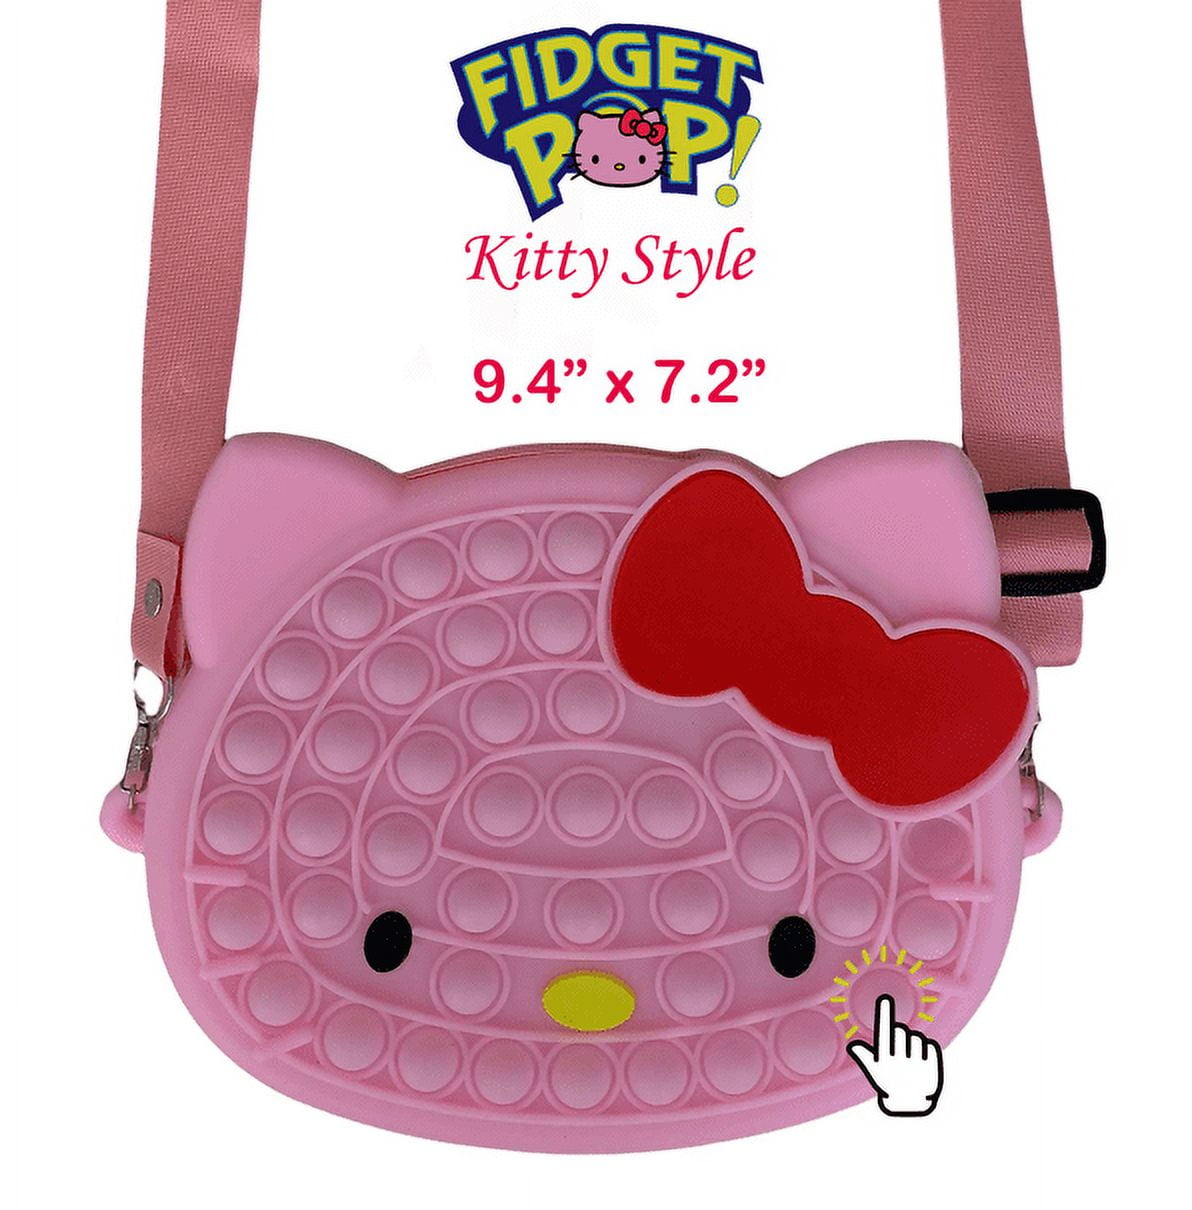 Big Pink Hello Kitty Pop Its Purse Fidget Purse Toy With Strap